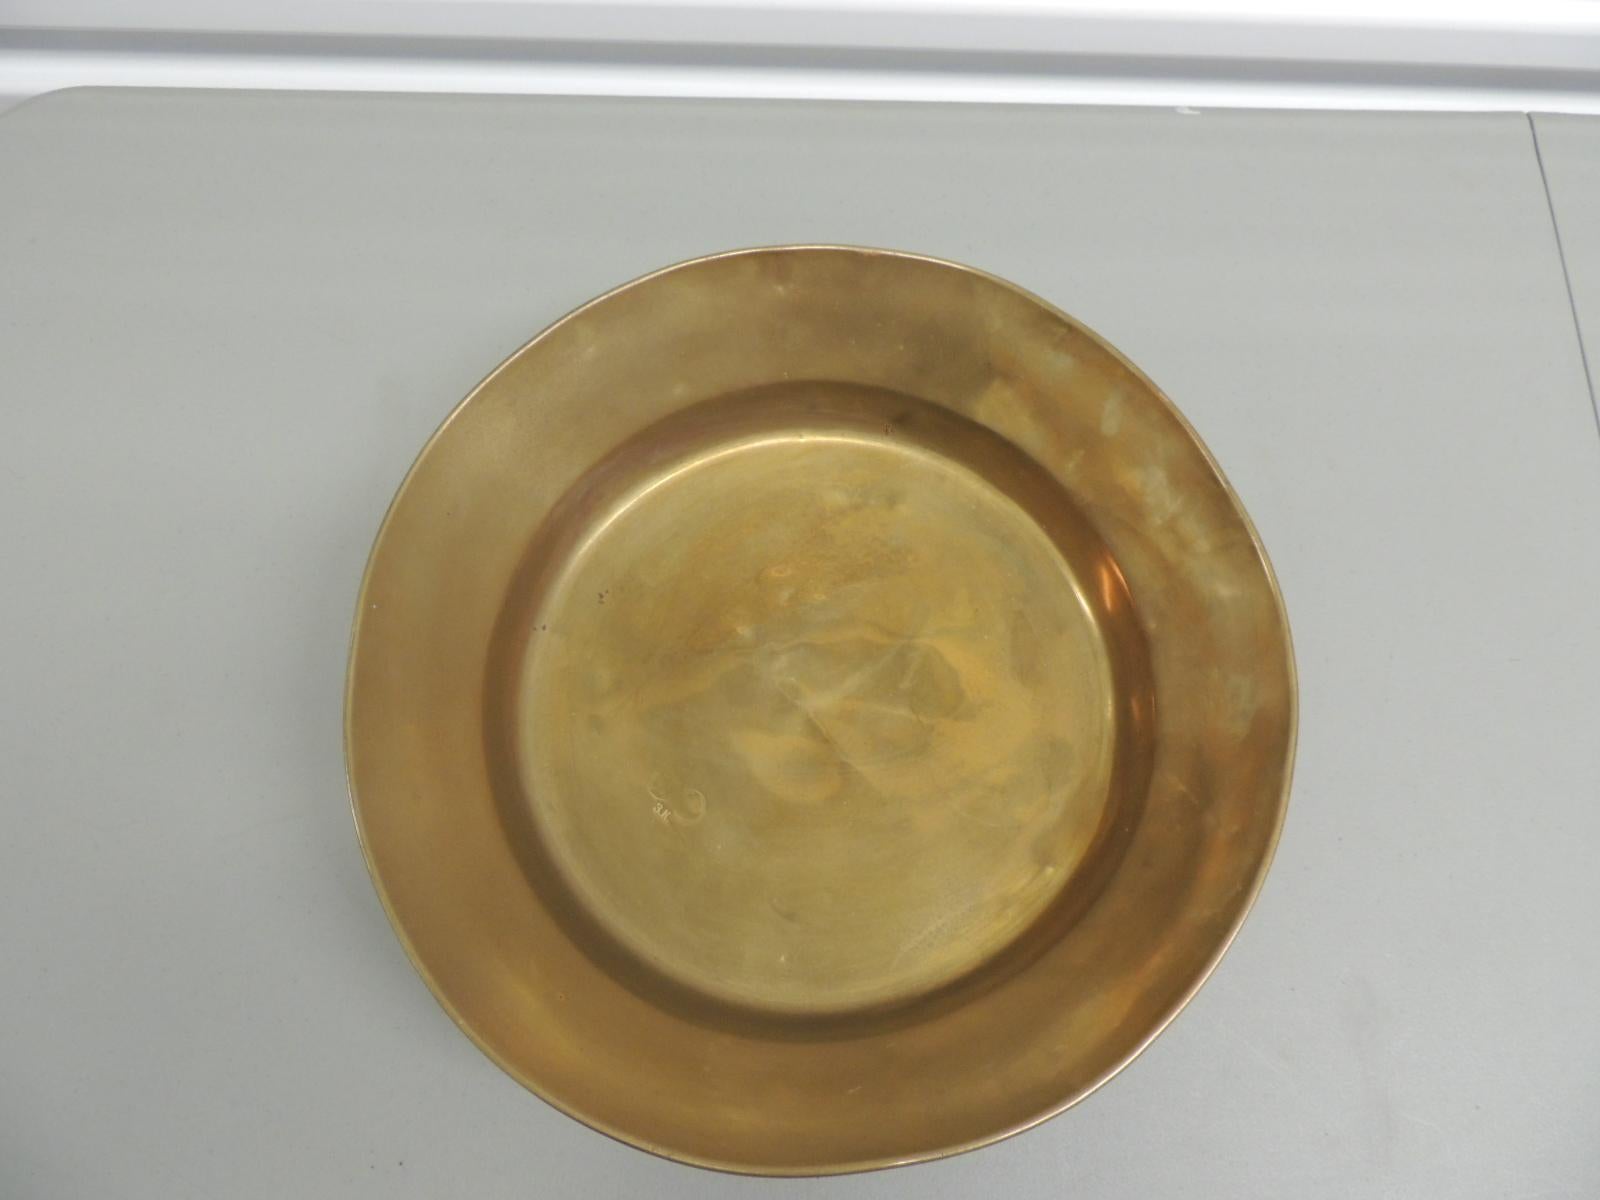 Antique brass Russian fruit bowl
3 Kilos measurement of rice,
circa 1910.
Decorative use only.